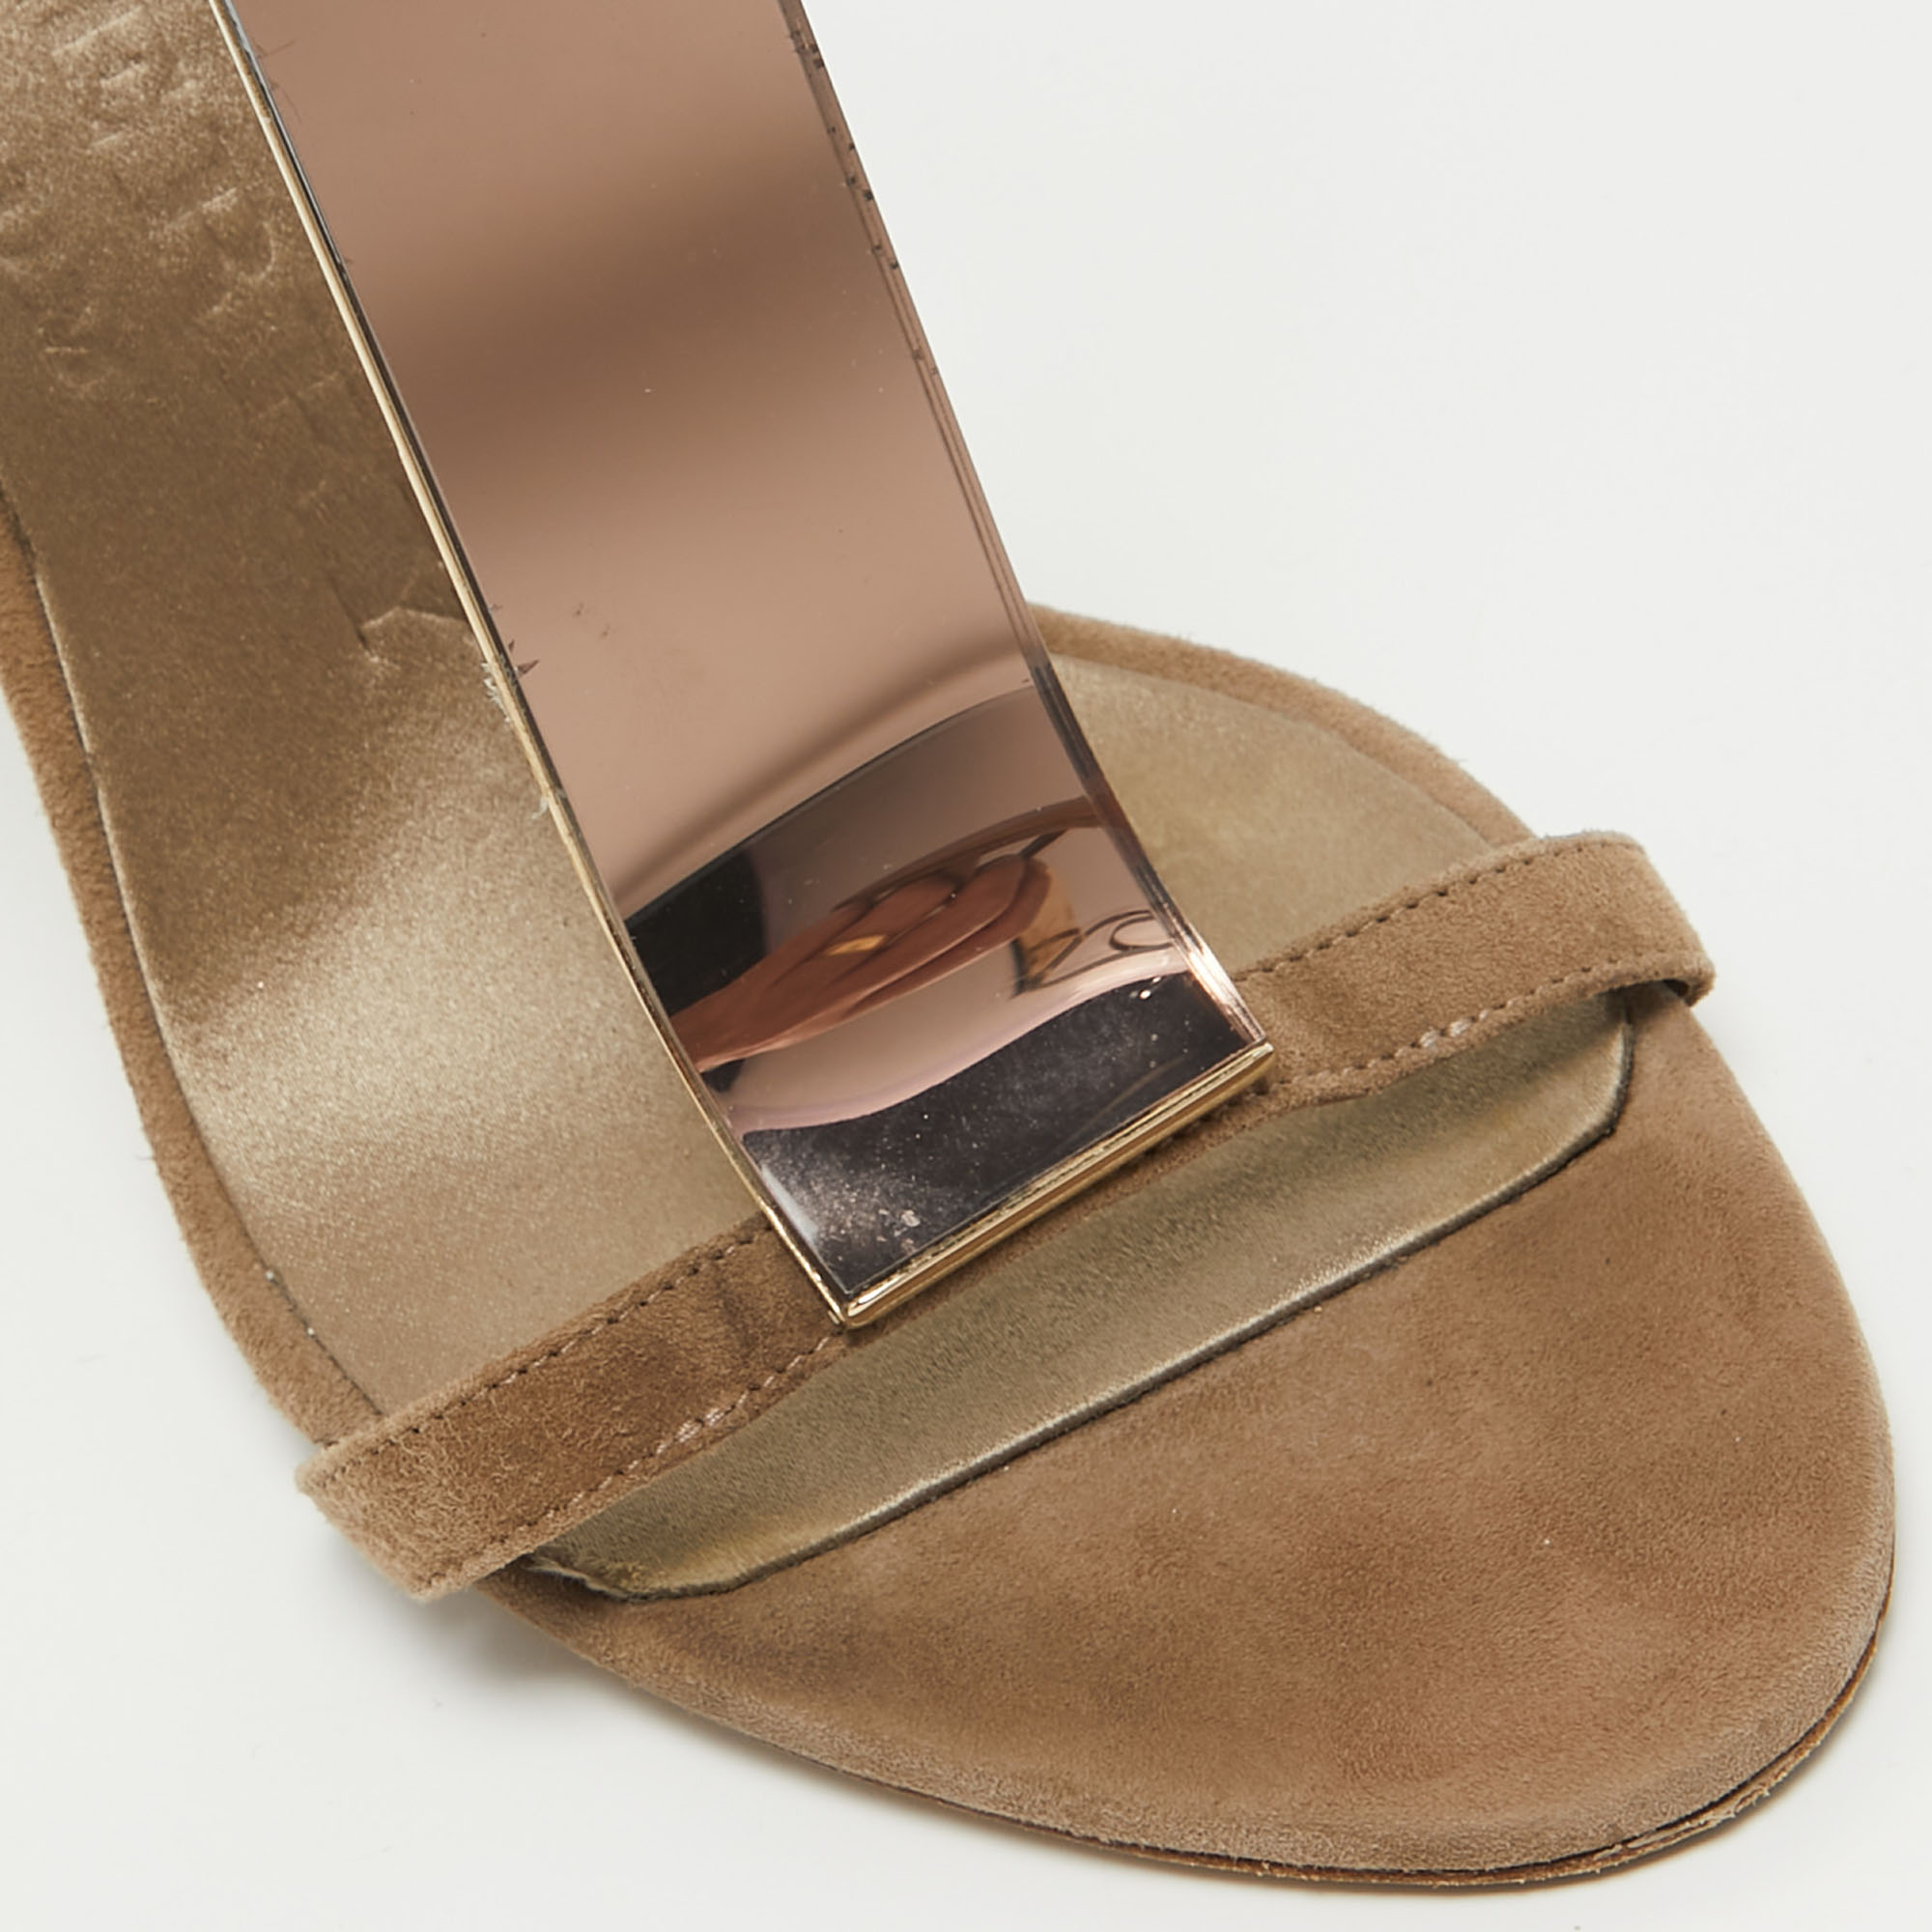 Burberry Beige Suede Embellished Ankle Strap Sandals Size 37